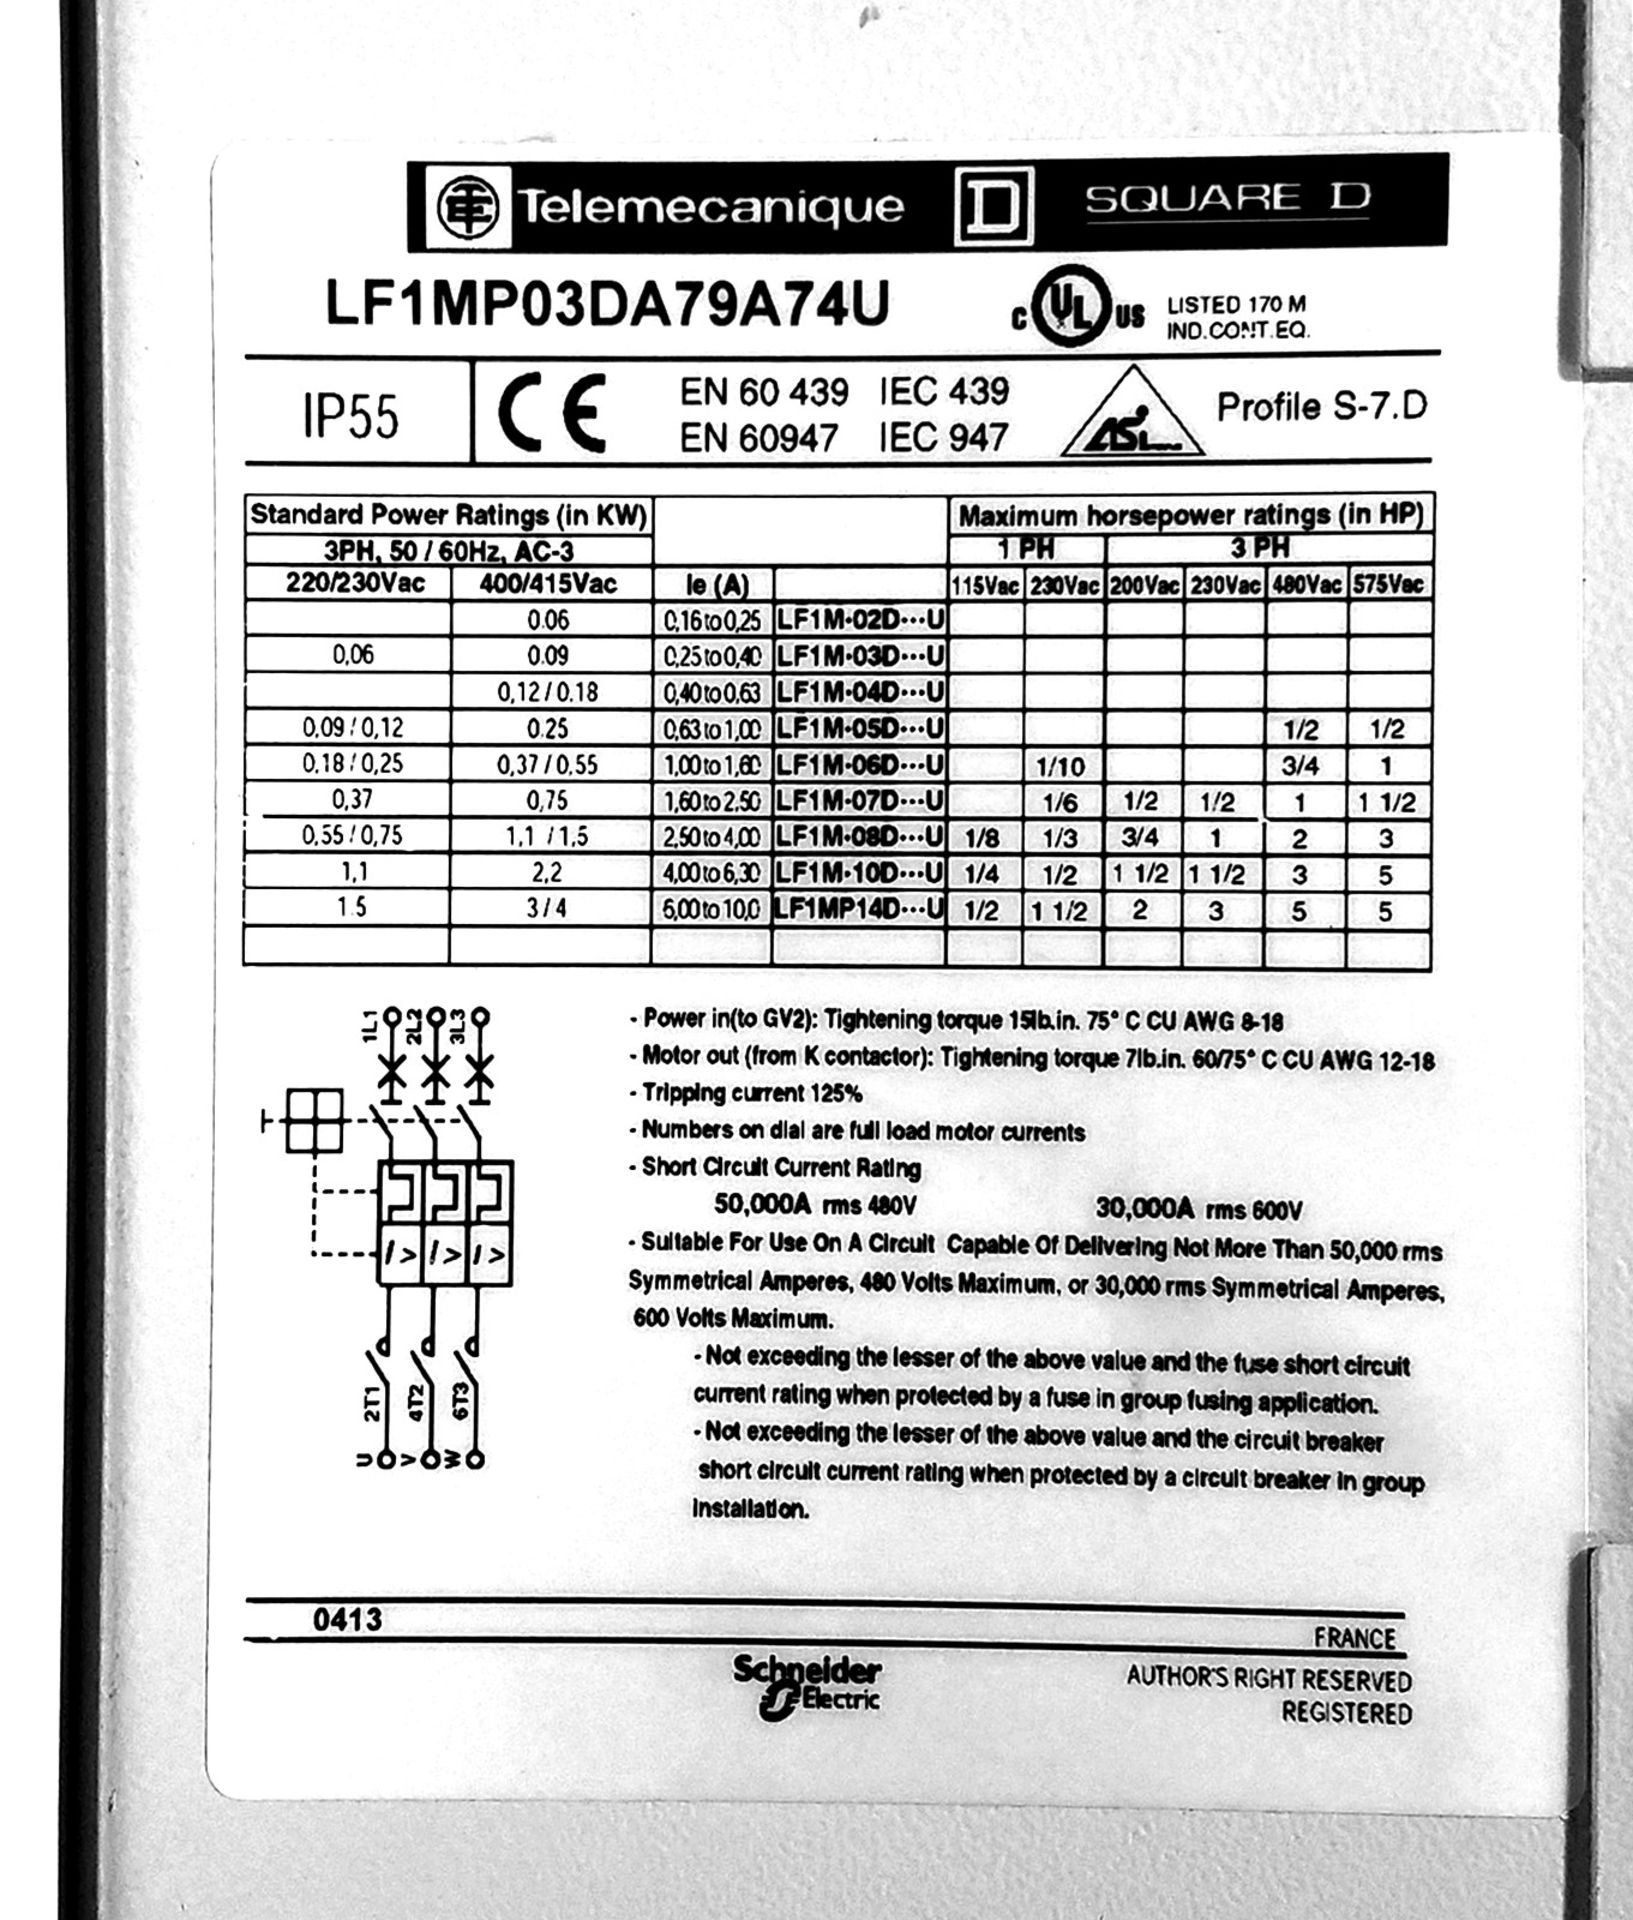 Telemecanique/Square-D LF1MP03DA79A74U Motor Start - Image 5 of 5